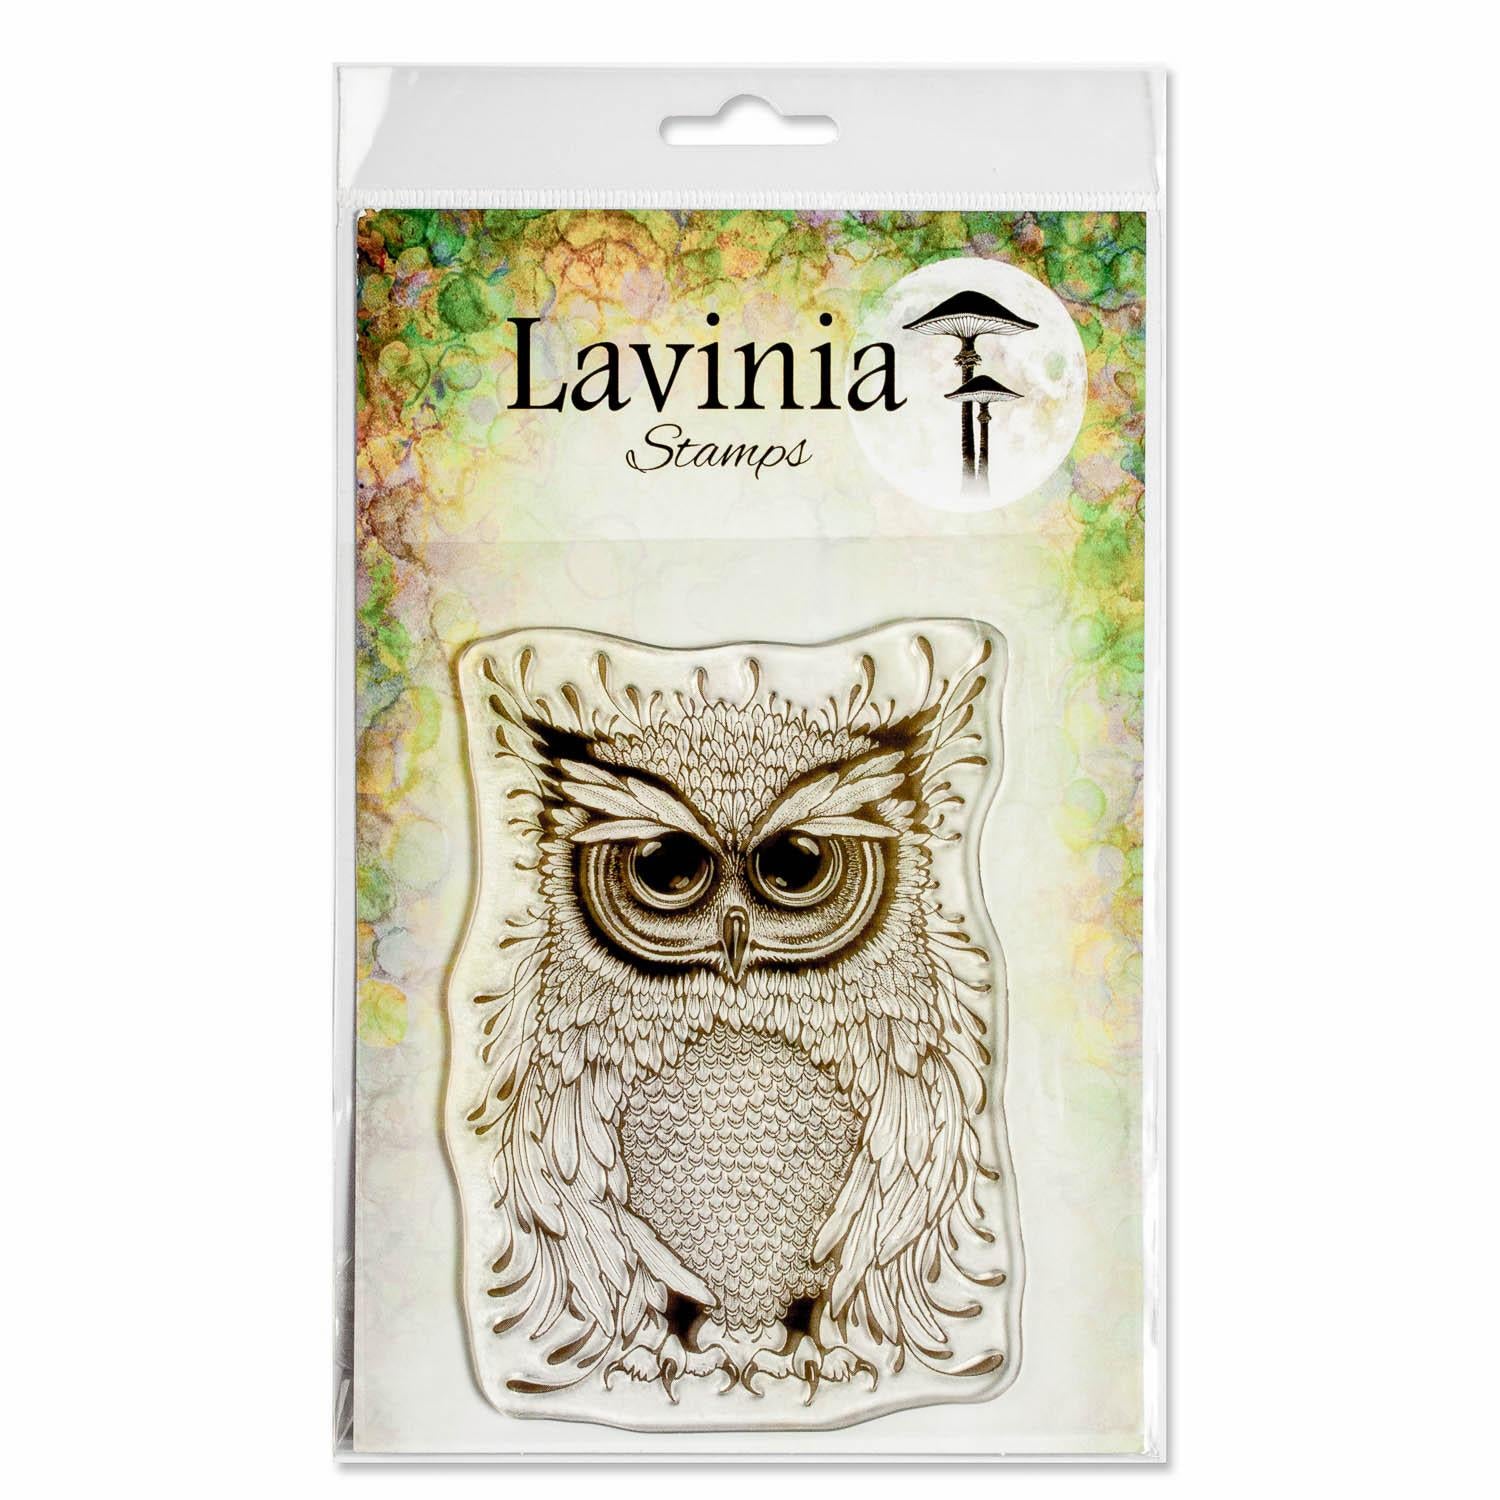 Lavinia Stamps - Erwin